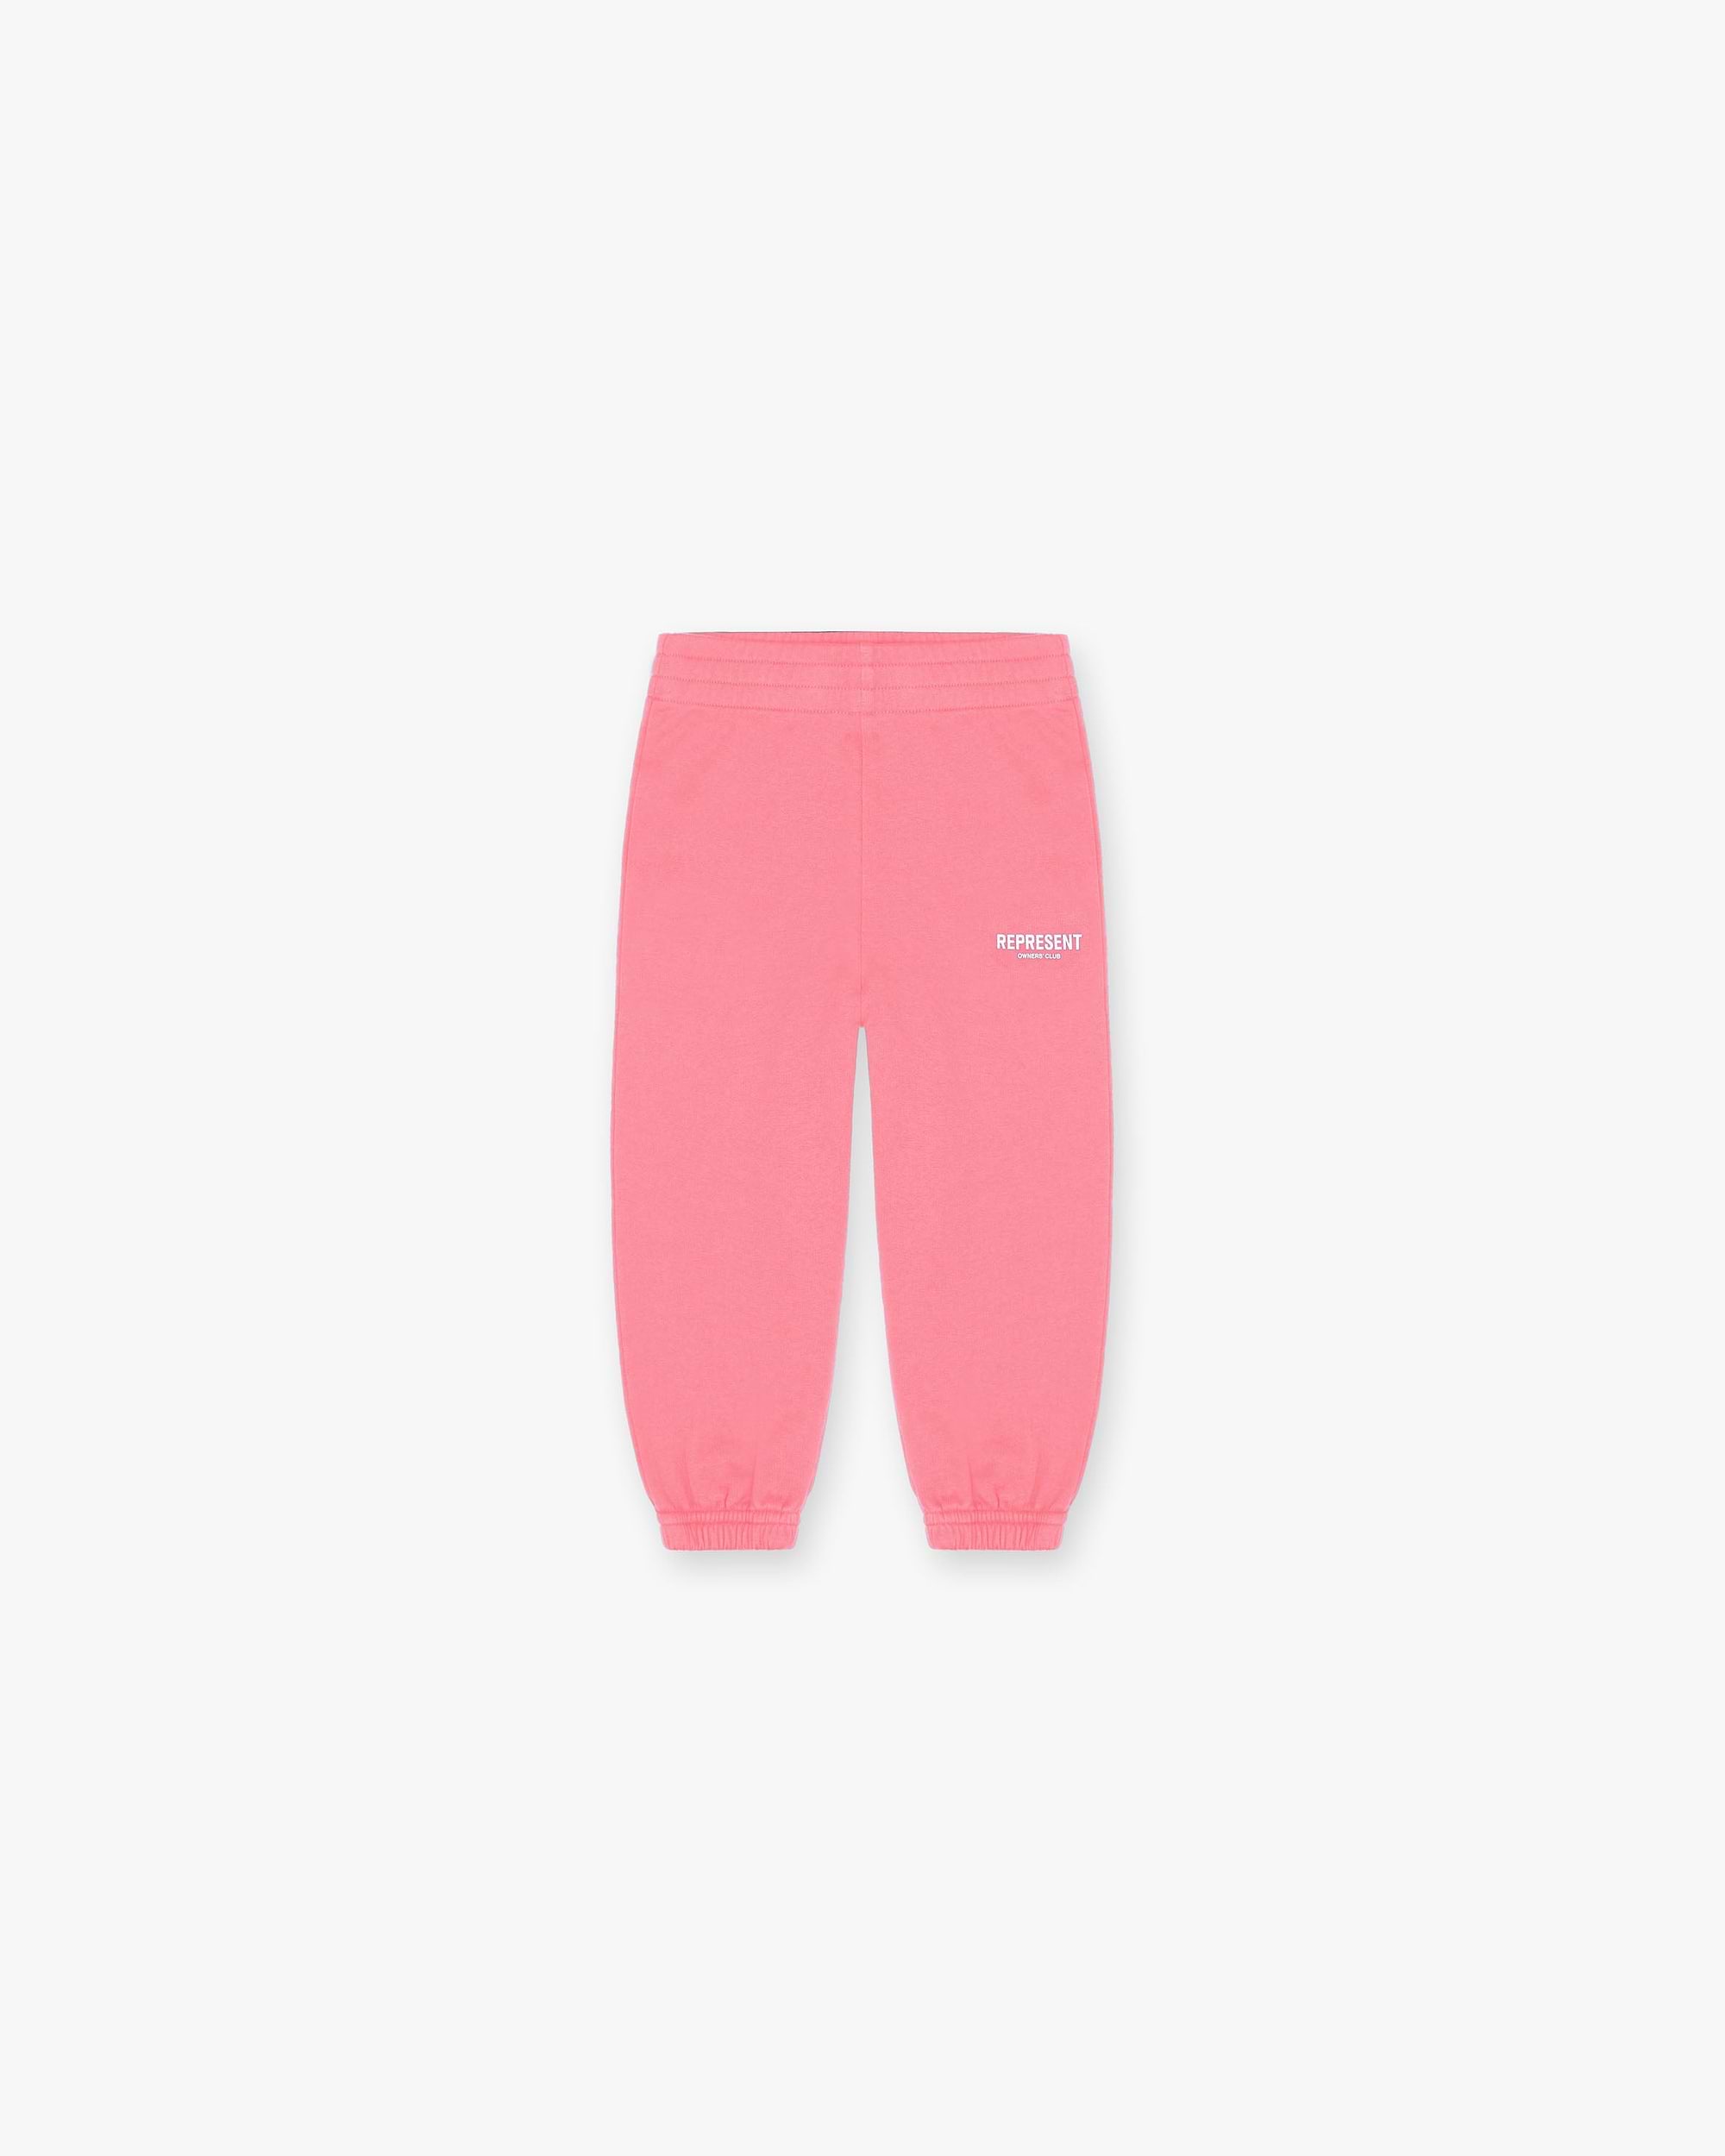 Represent Mini Owners Club Sweatpants | Bubblegum Pink Pants Owners Club | Represent Clo